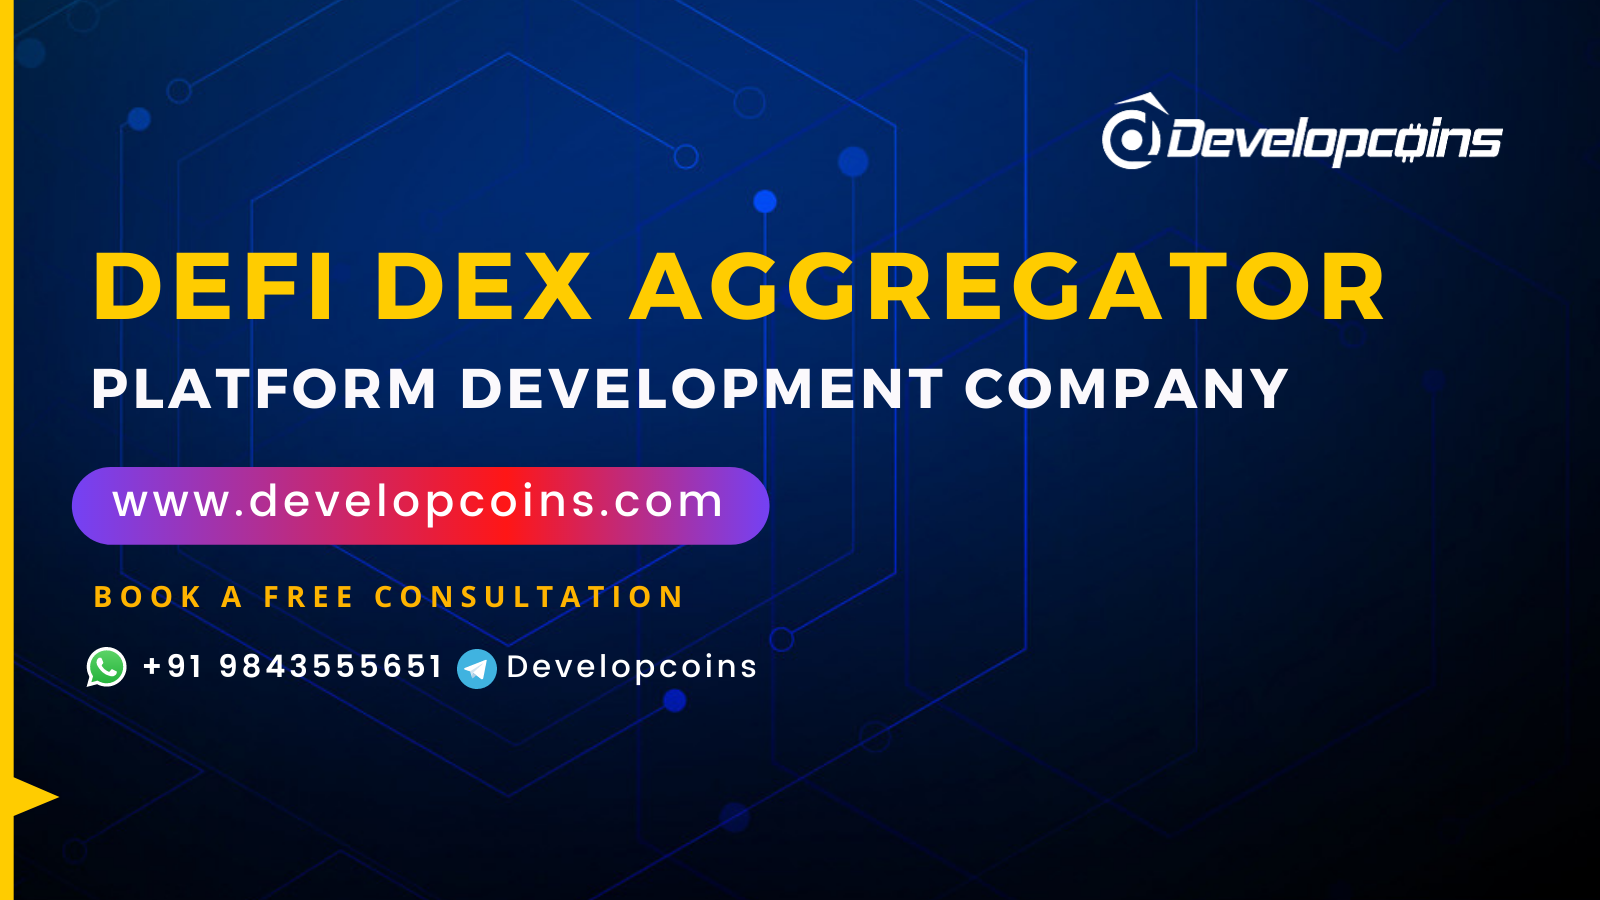 DeFi DEX Aggregator Platform Development Company